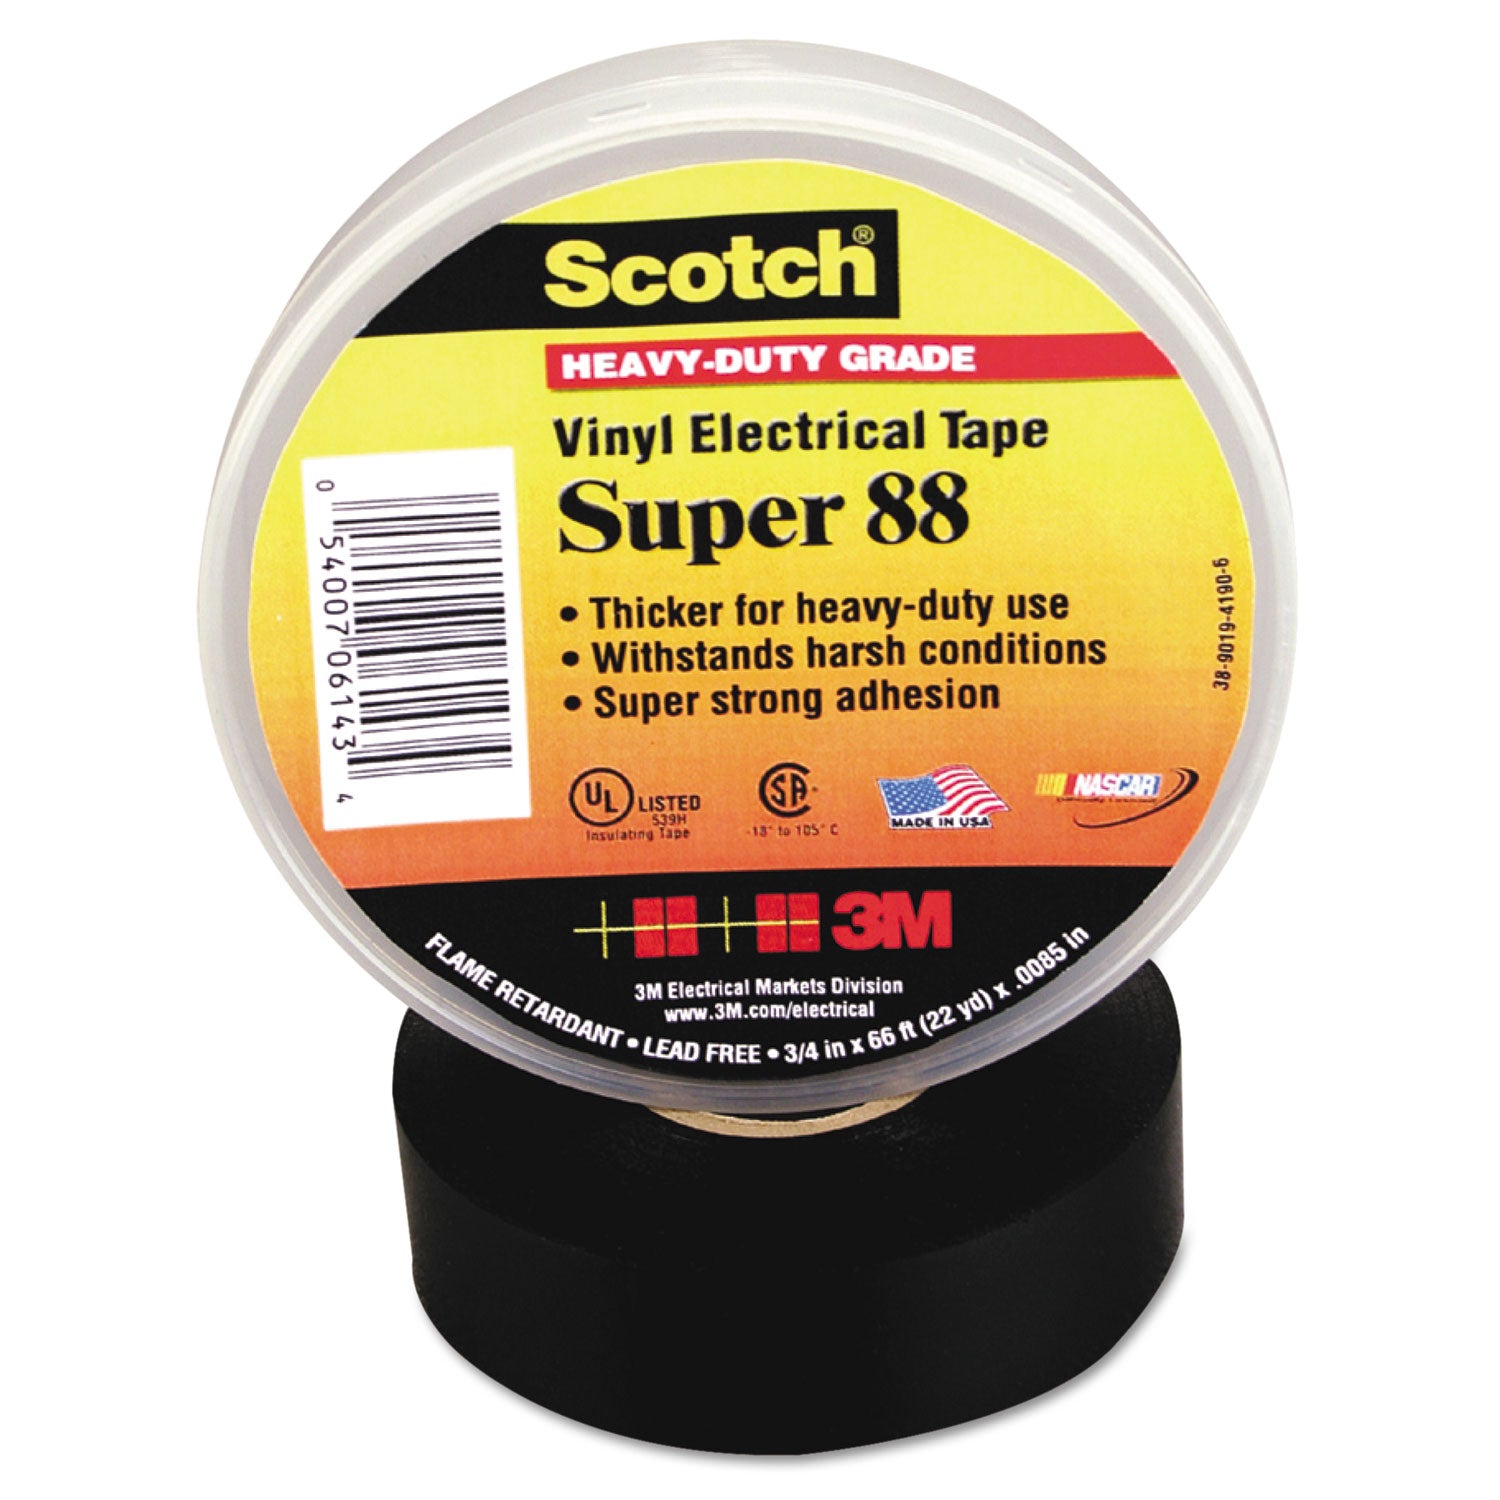 Scotch 88 Super Vinyl Electrical Tape, 0.75" x 66 ft, Black - 